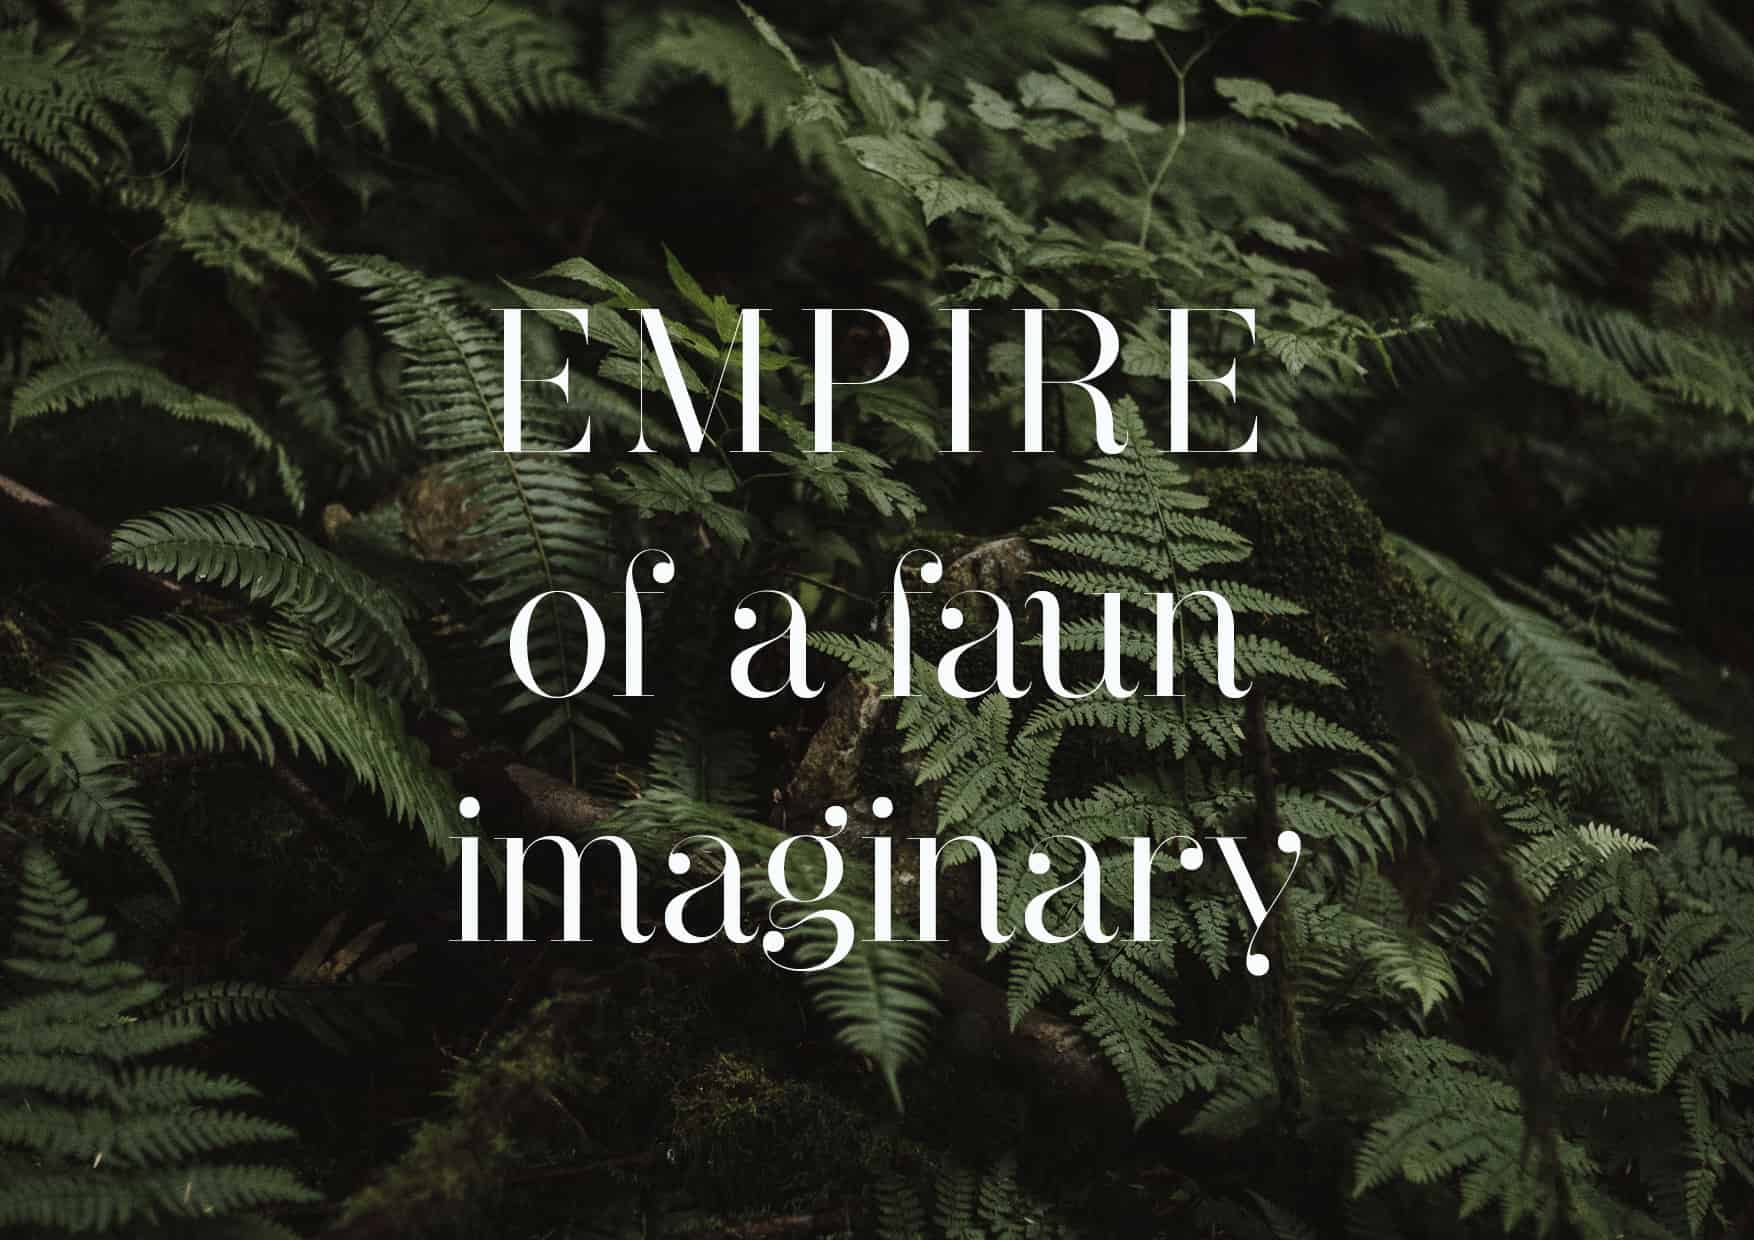 Simone Mousset <br />
"Empire of a Faun Imaginary"